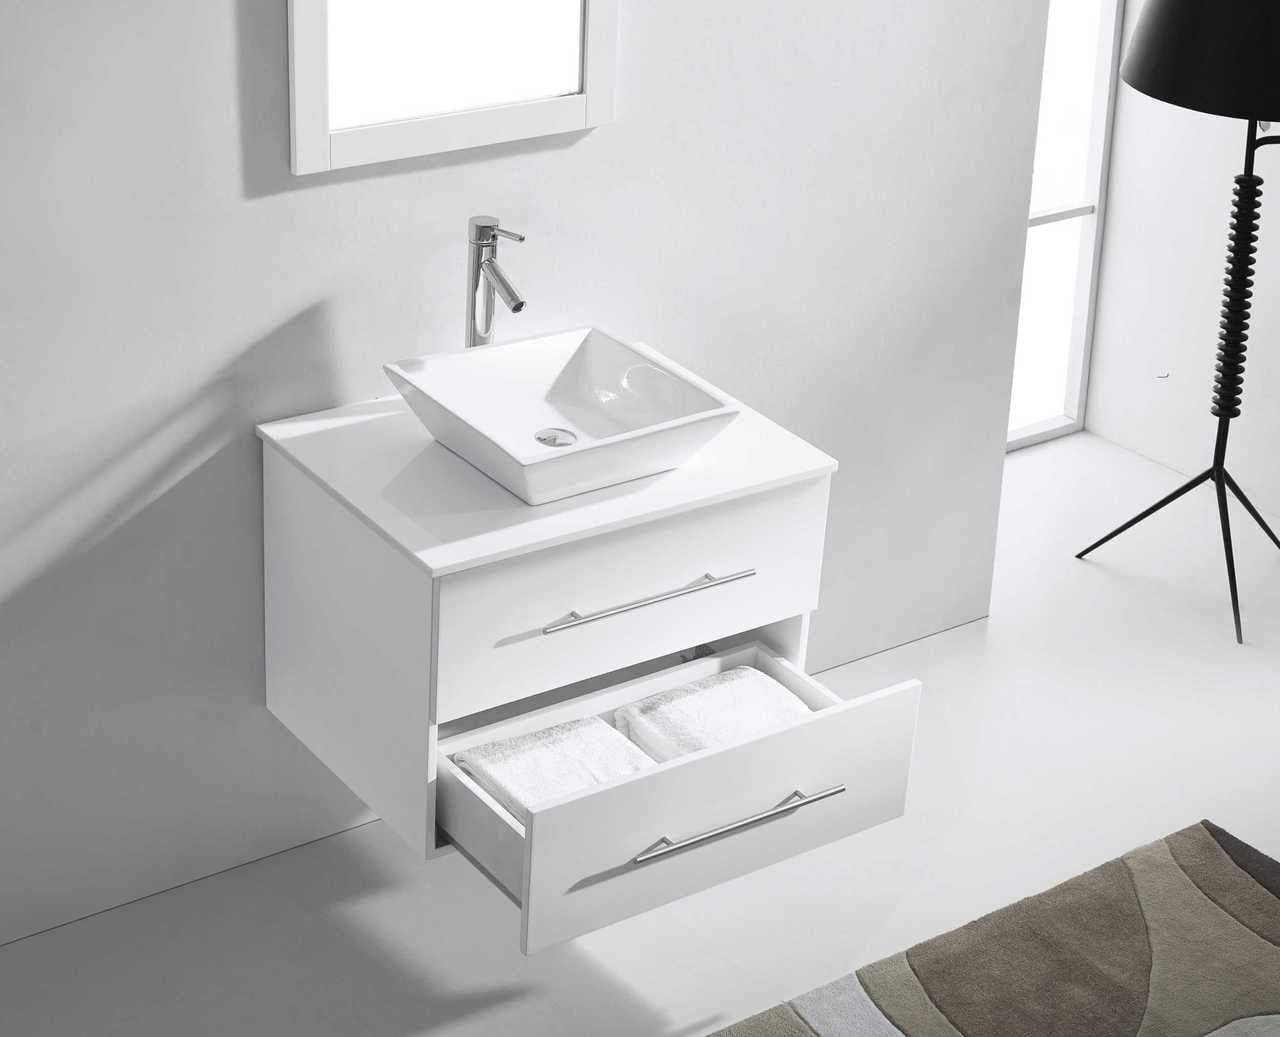 Virtu USA Marsala 29 Single Bathroom Vanity Set in White